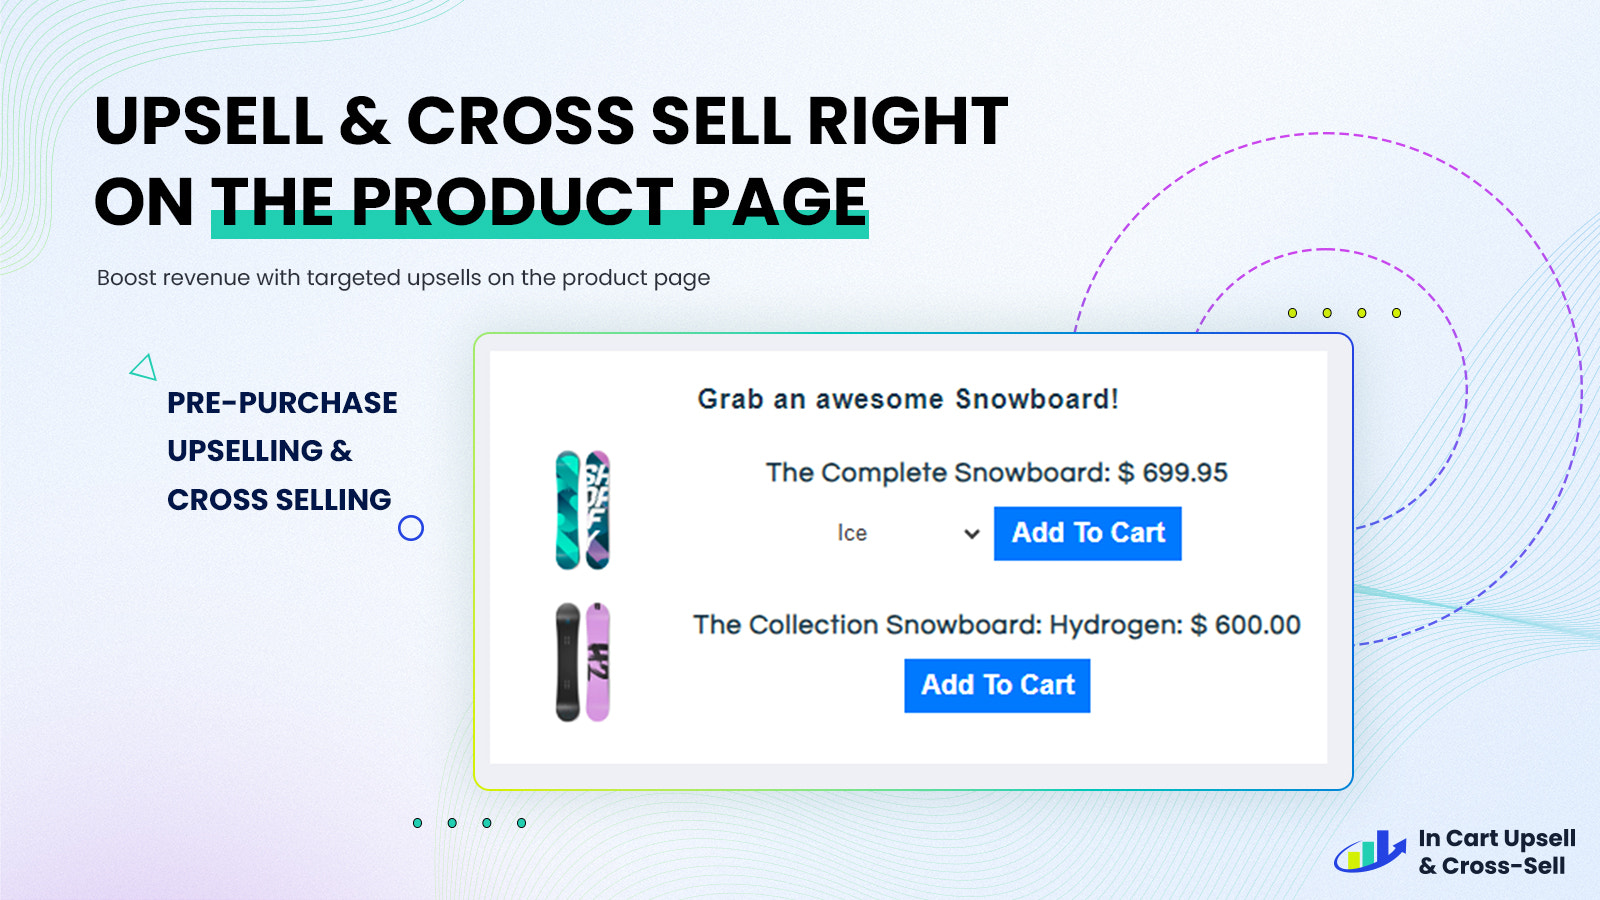 Ofereça upsells e cross sells na página do produto